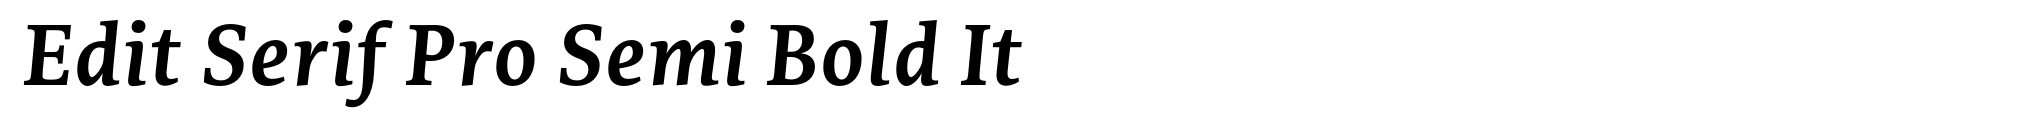 Edit Serif Pro Semi Bold It image